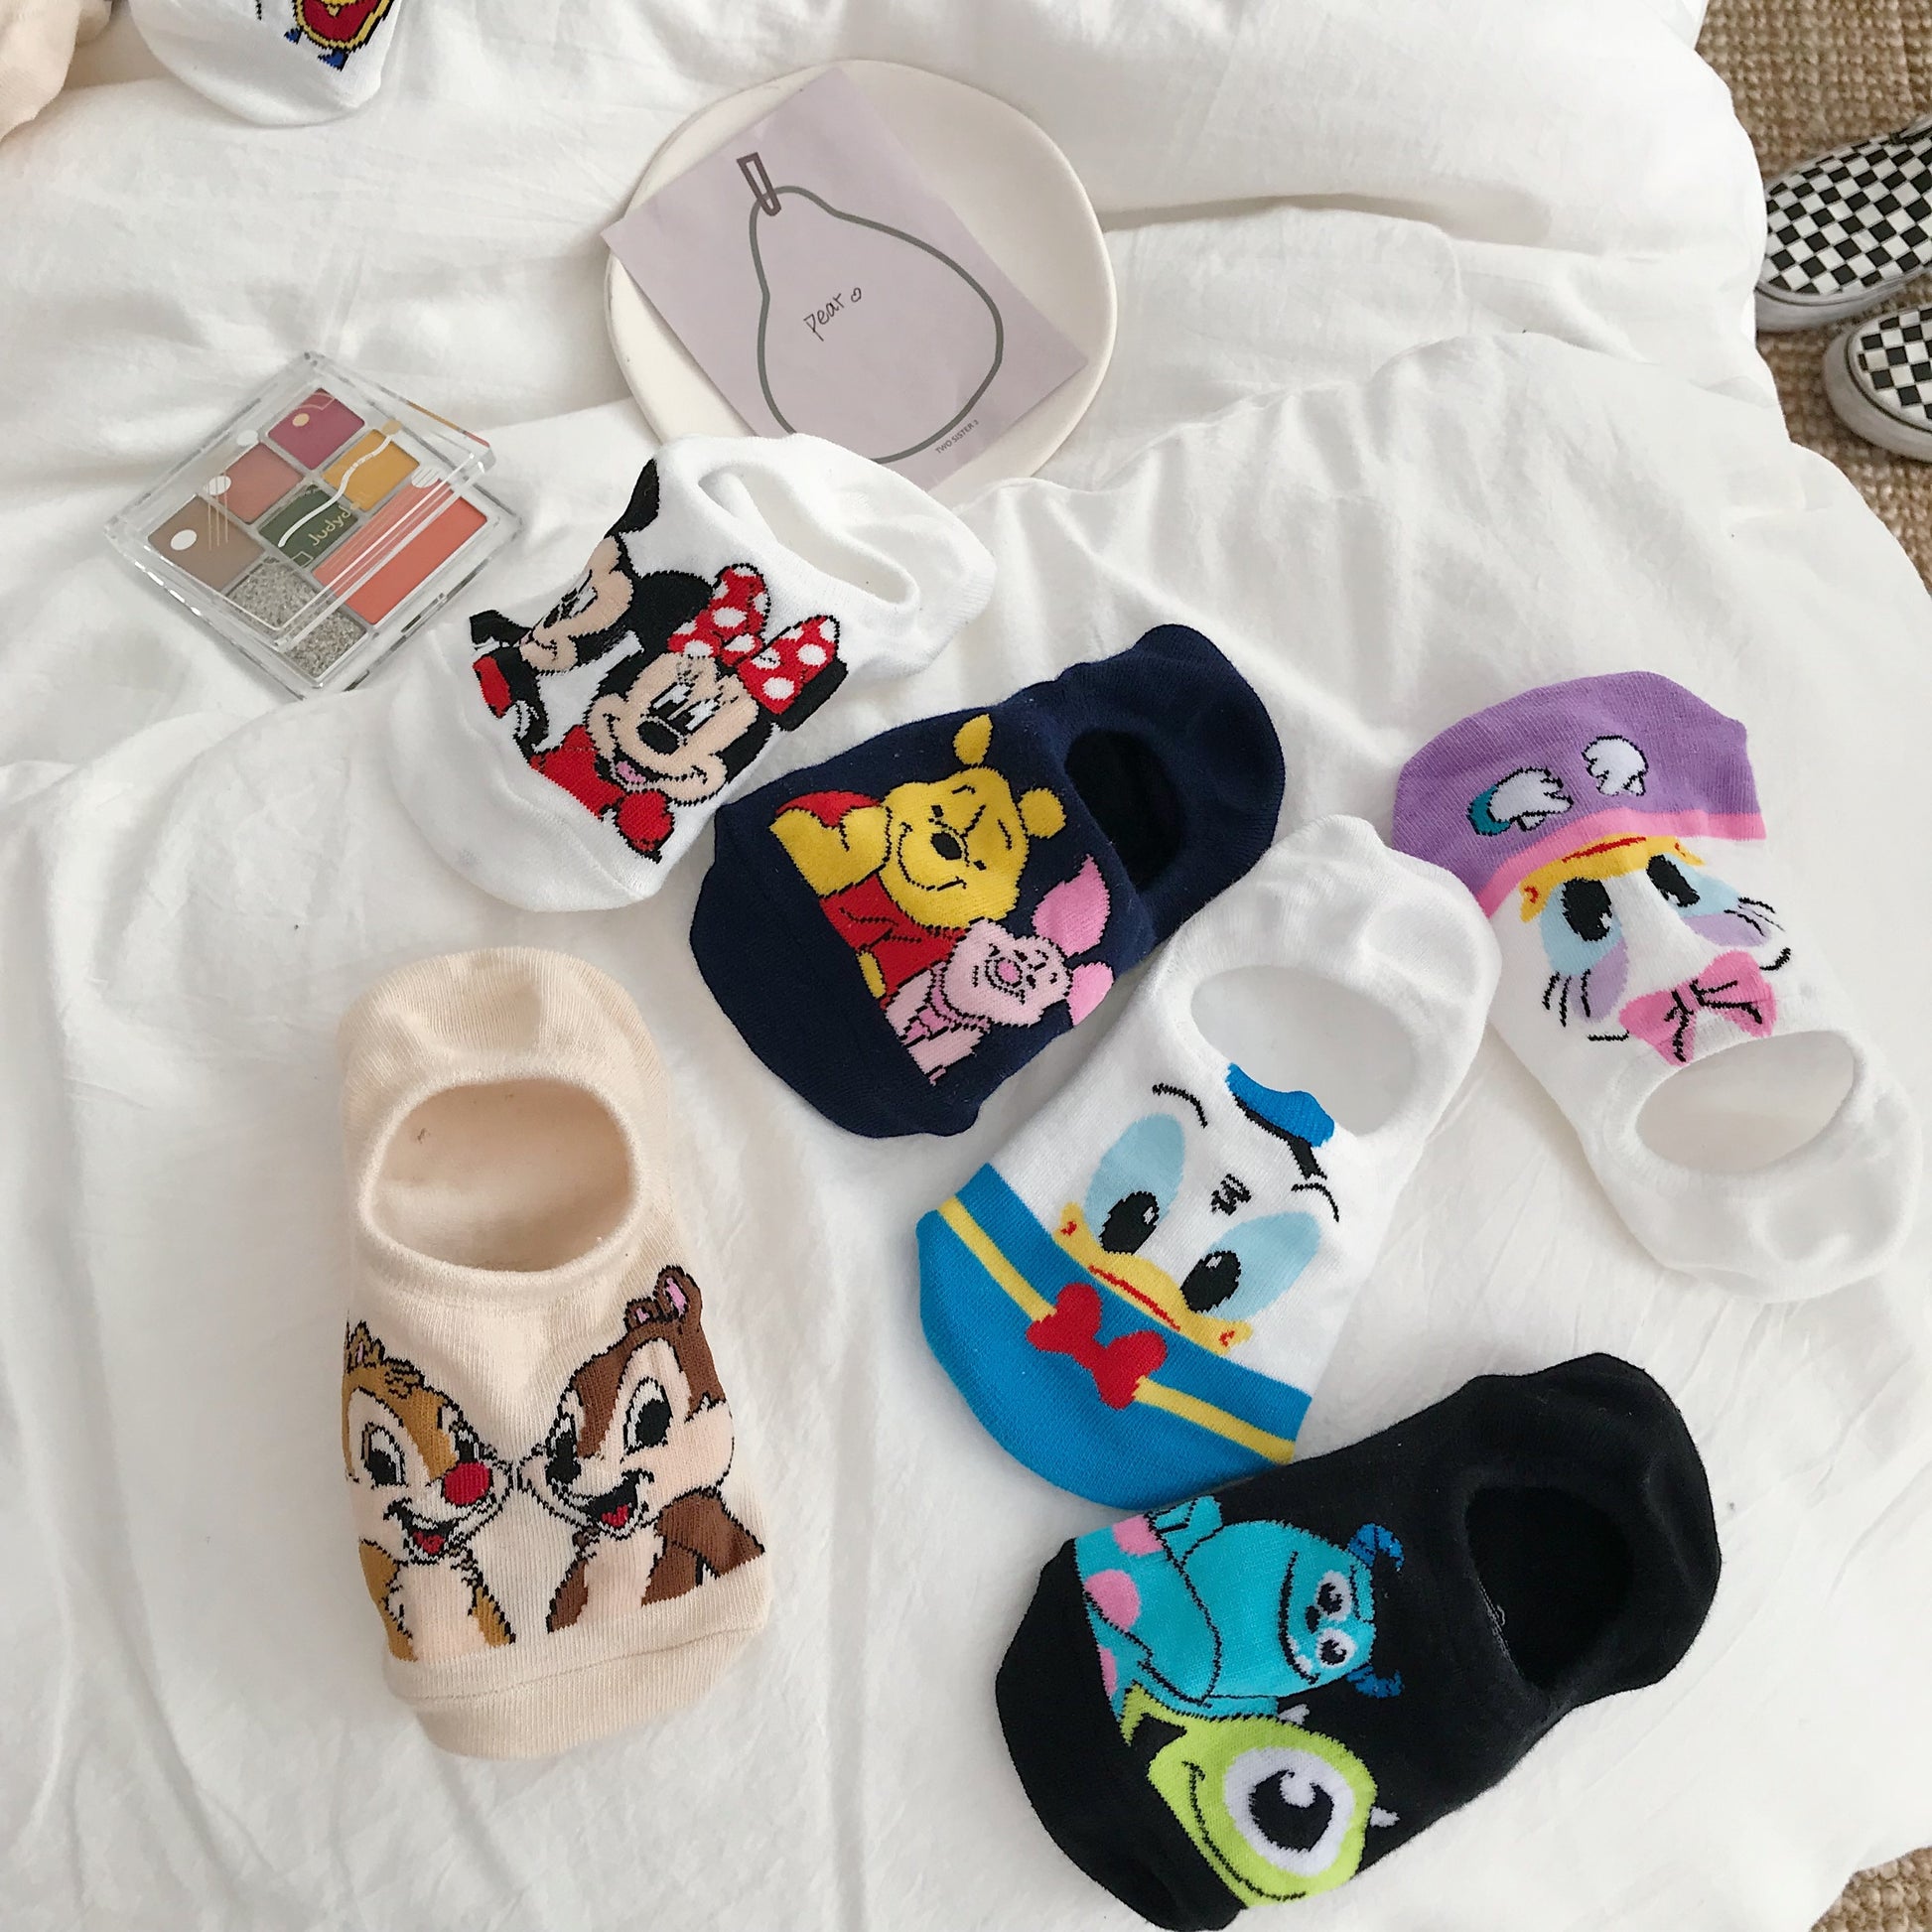 5 Pairs/Lot summer Casual Cute women Socks animal Cartoon Mouse Duck Cotton socks Hot Trends